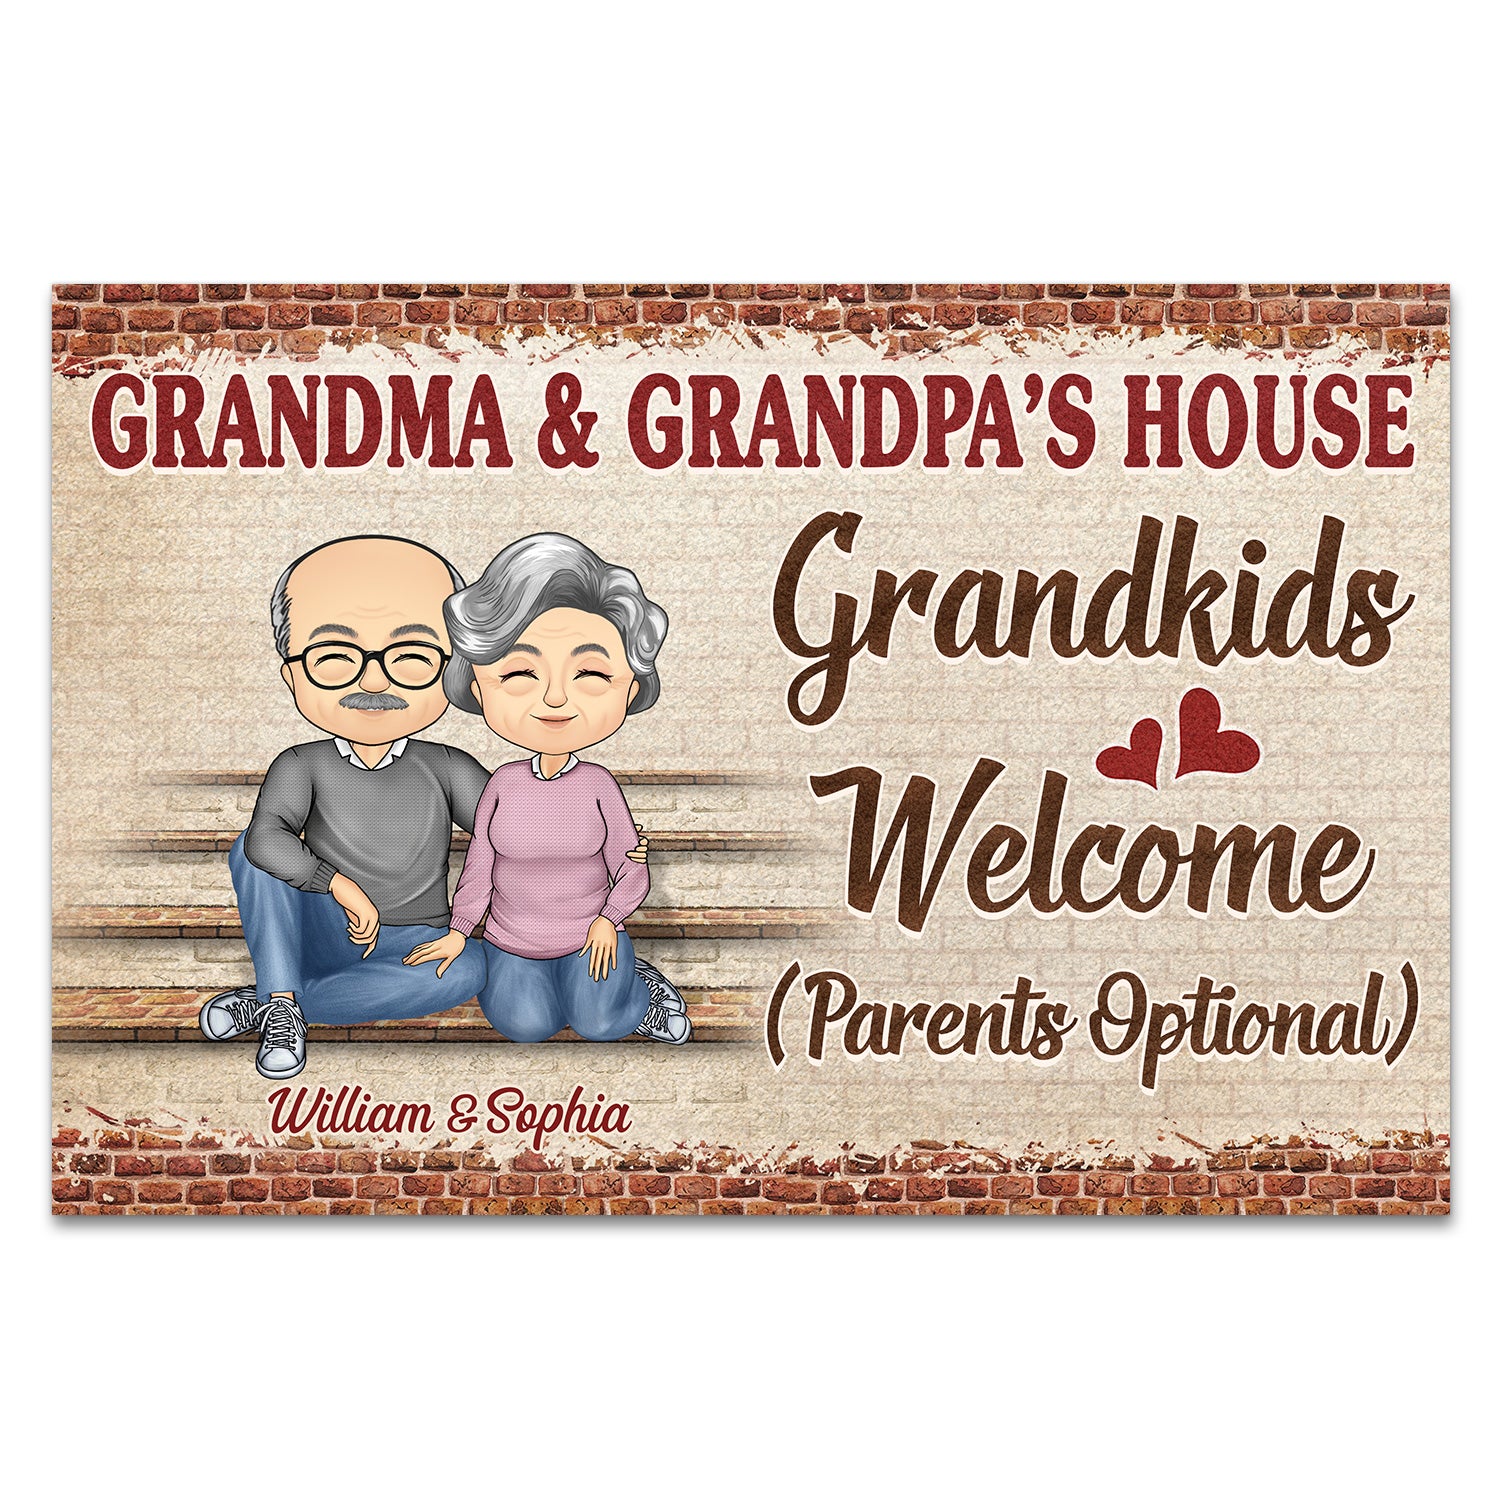 Grandma And Grandpa's House Grandkids Welcome Parents Optional Grandparents Chibi Couple - Family Gift - Personalized Custom Doormat